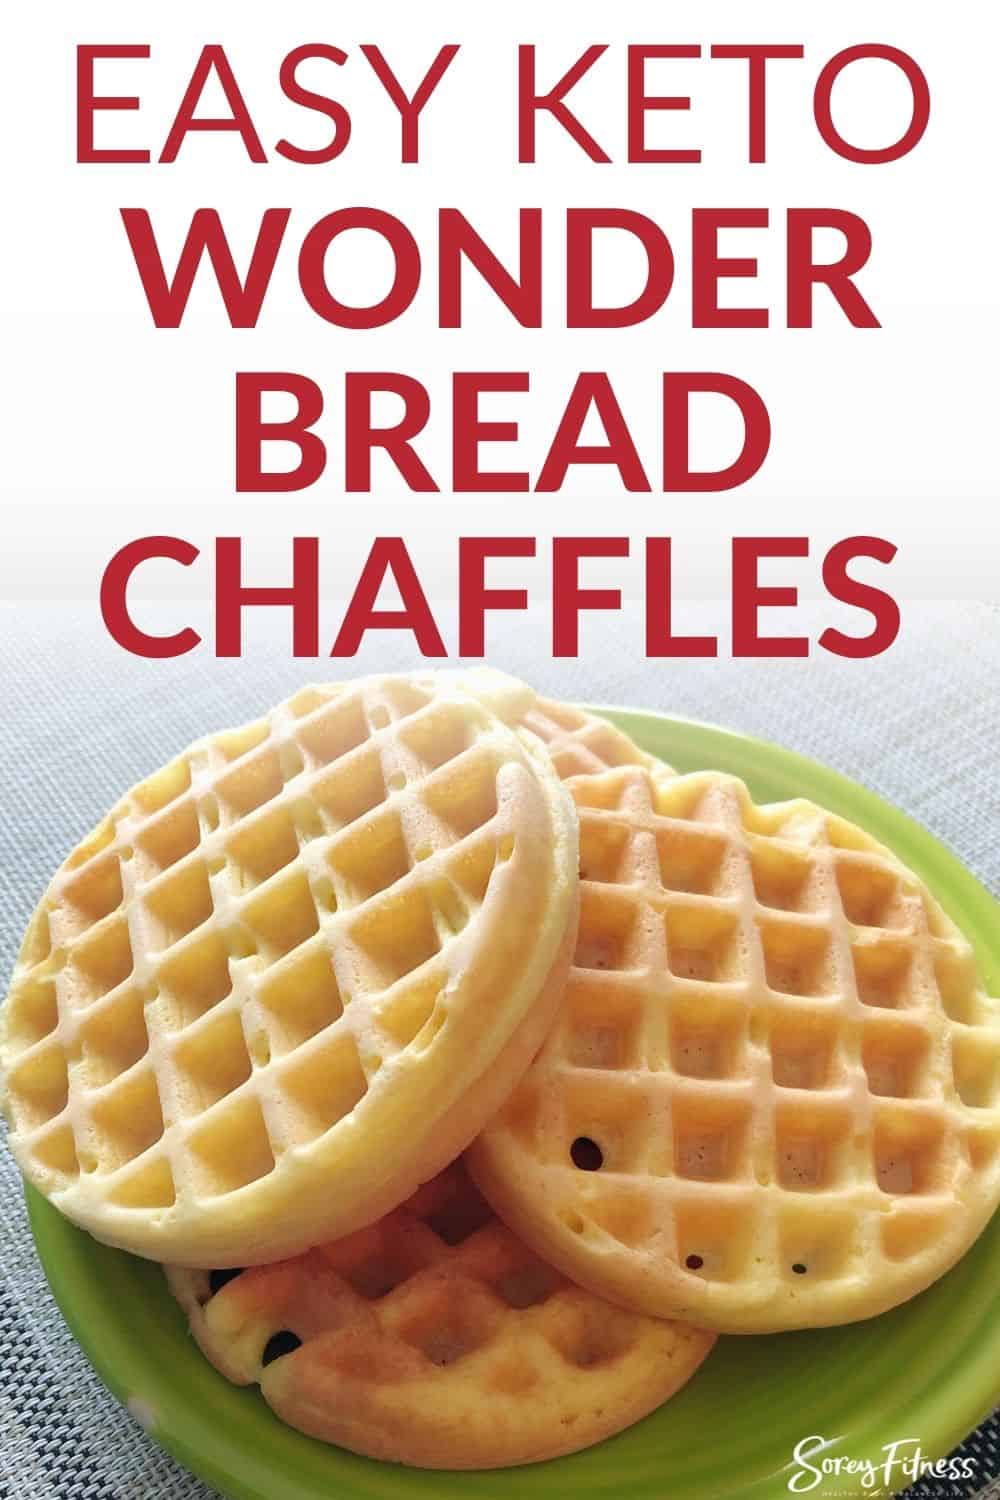 https://soreyfitness.com/wp-content/uploads/2021/06/Keto-wonder-bread-chaffle-recipe.jpg